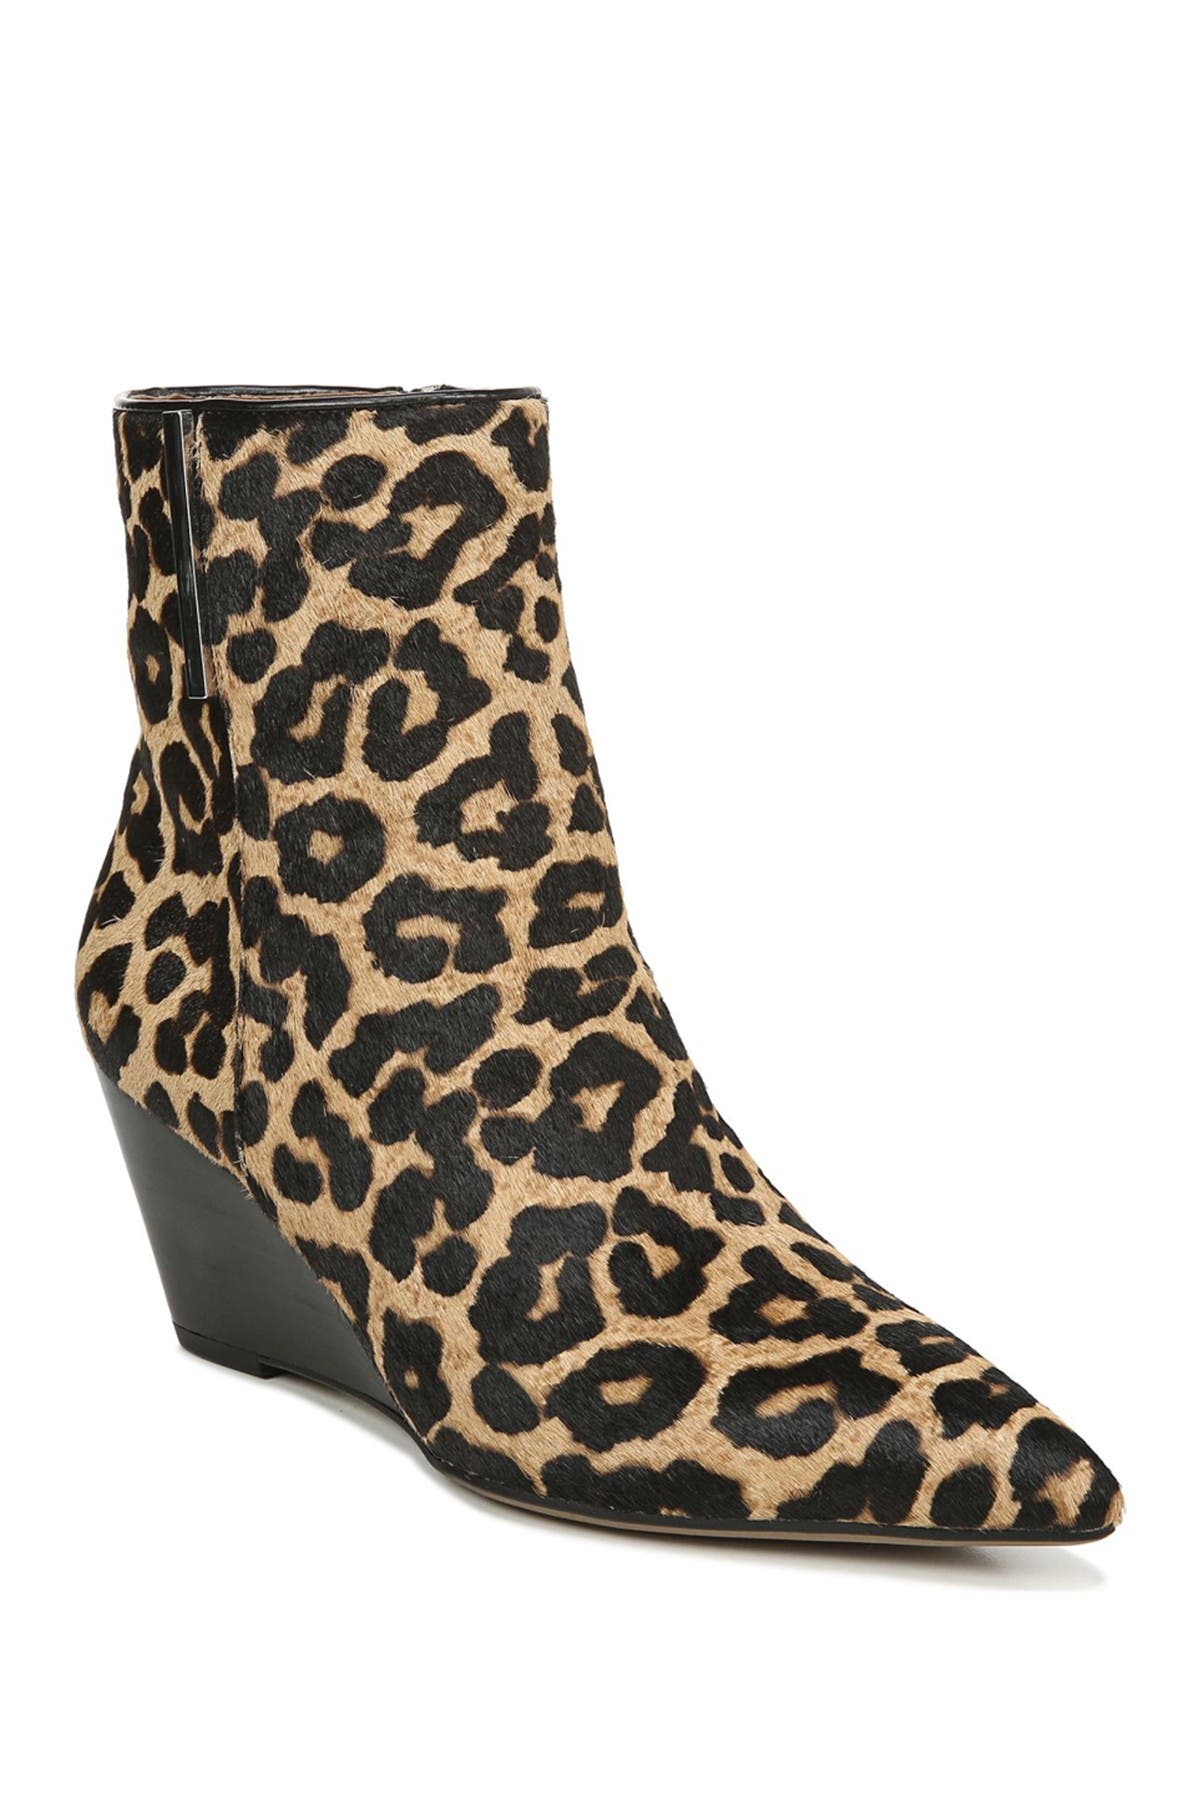 franco sarto leopard wedge shoes